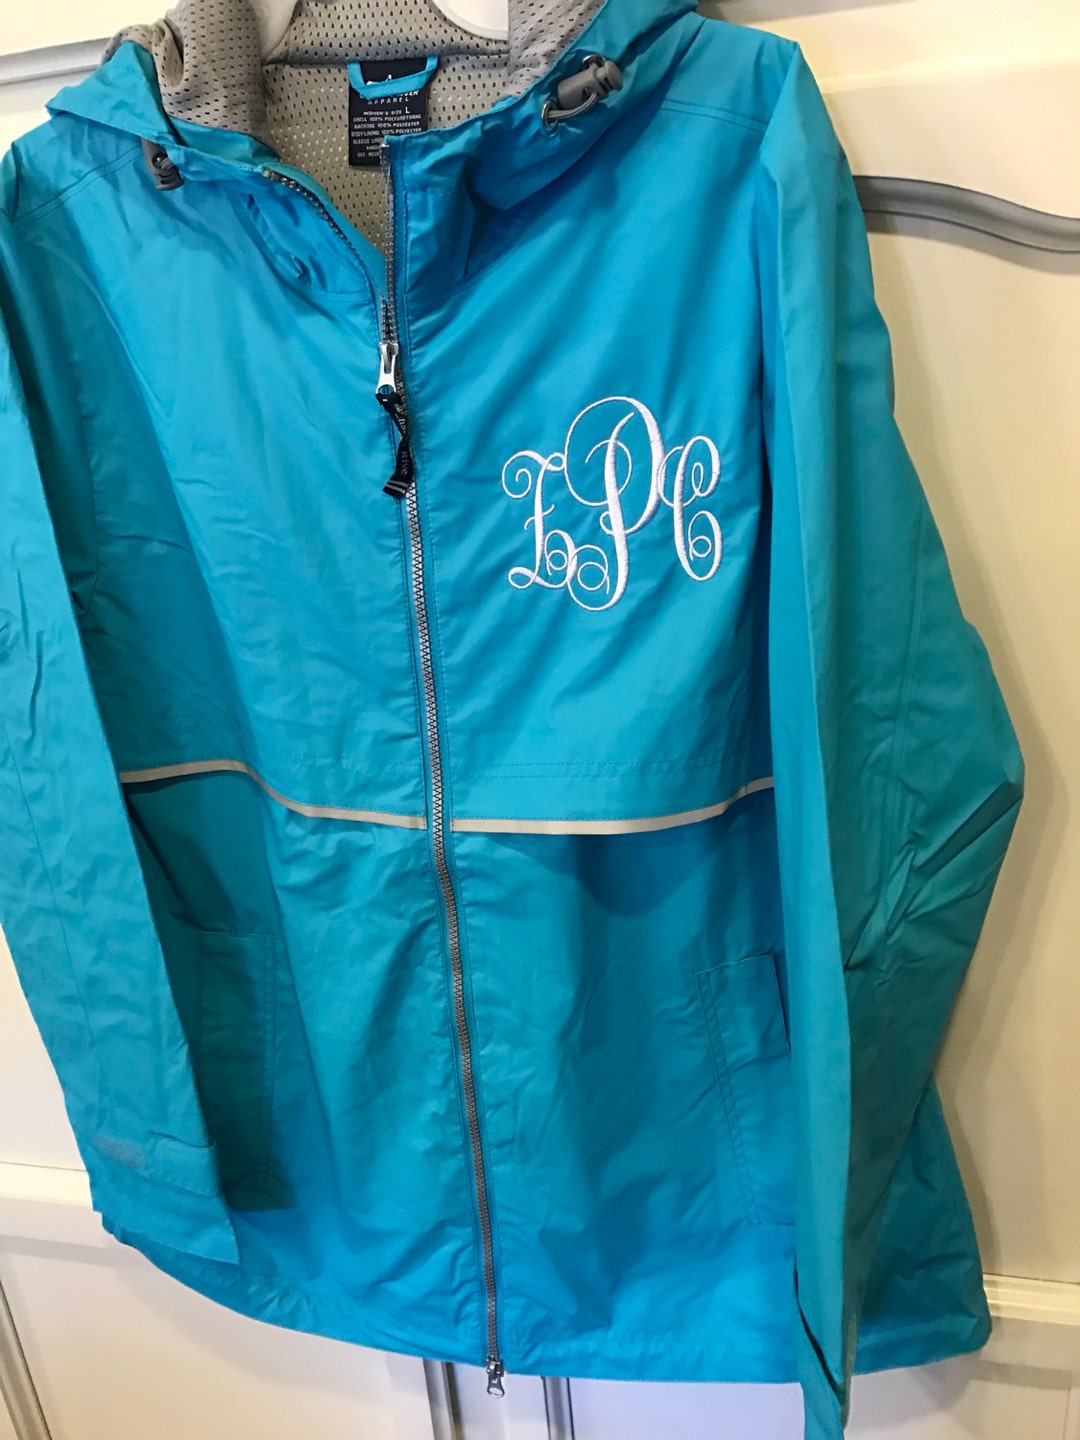 Charles River Women's New Englander Mauve Rain Jacket #5099